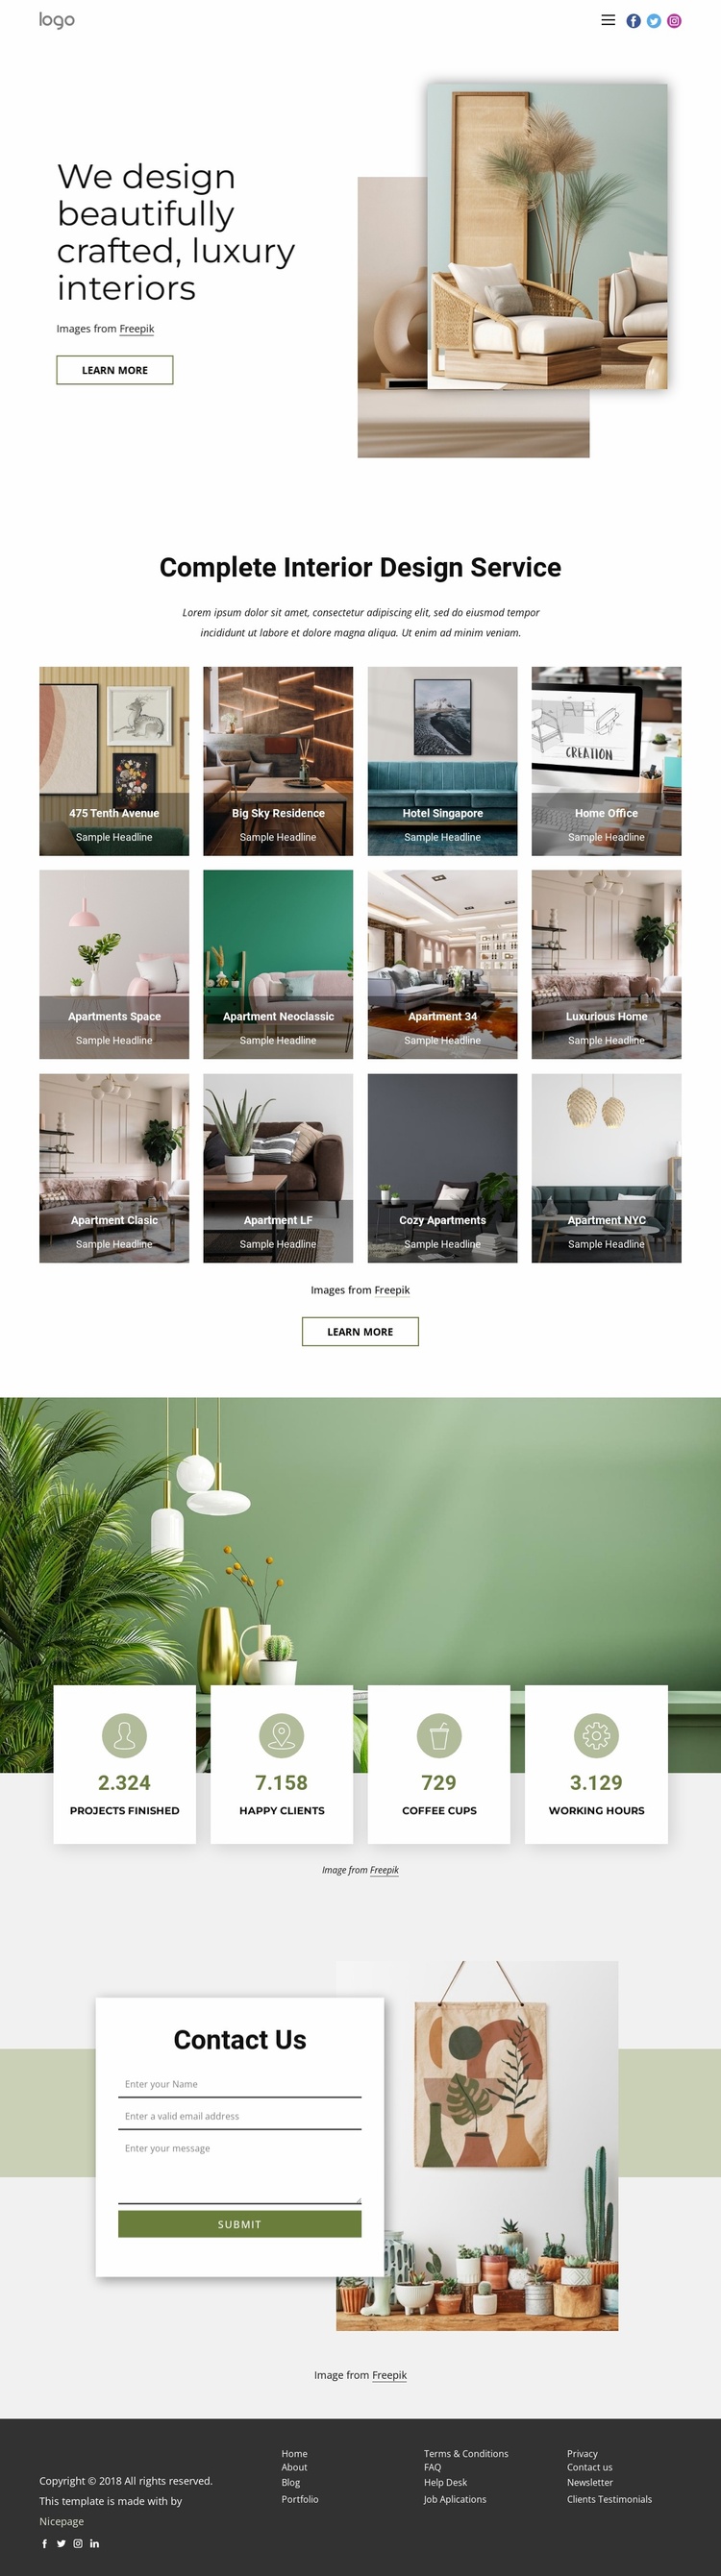 We design luxury interiors eCommerce Website Design